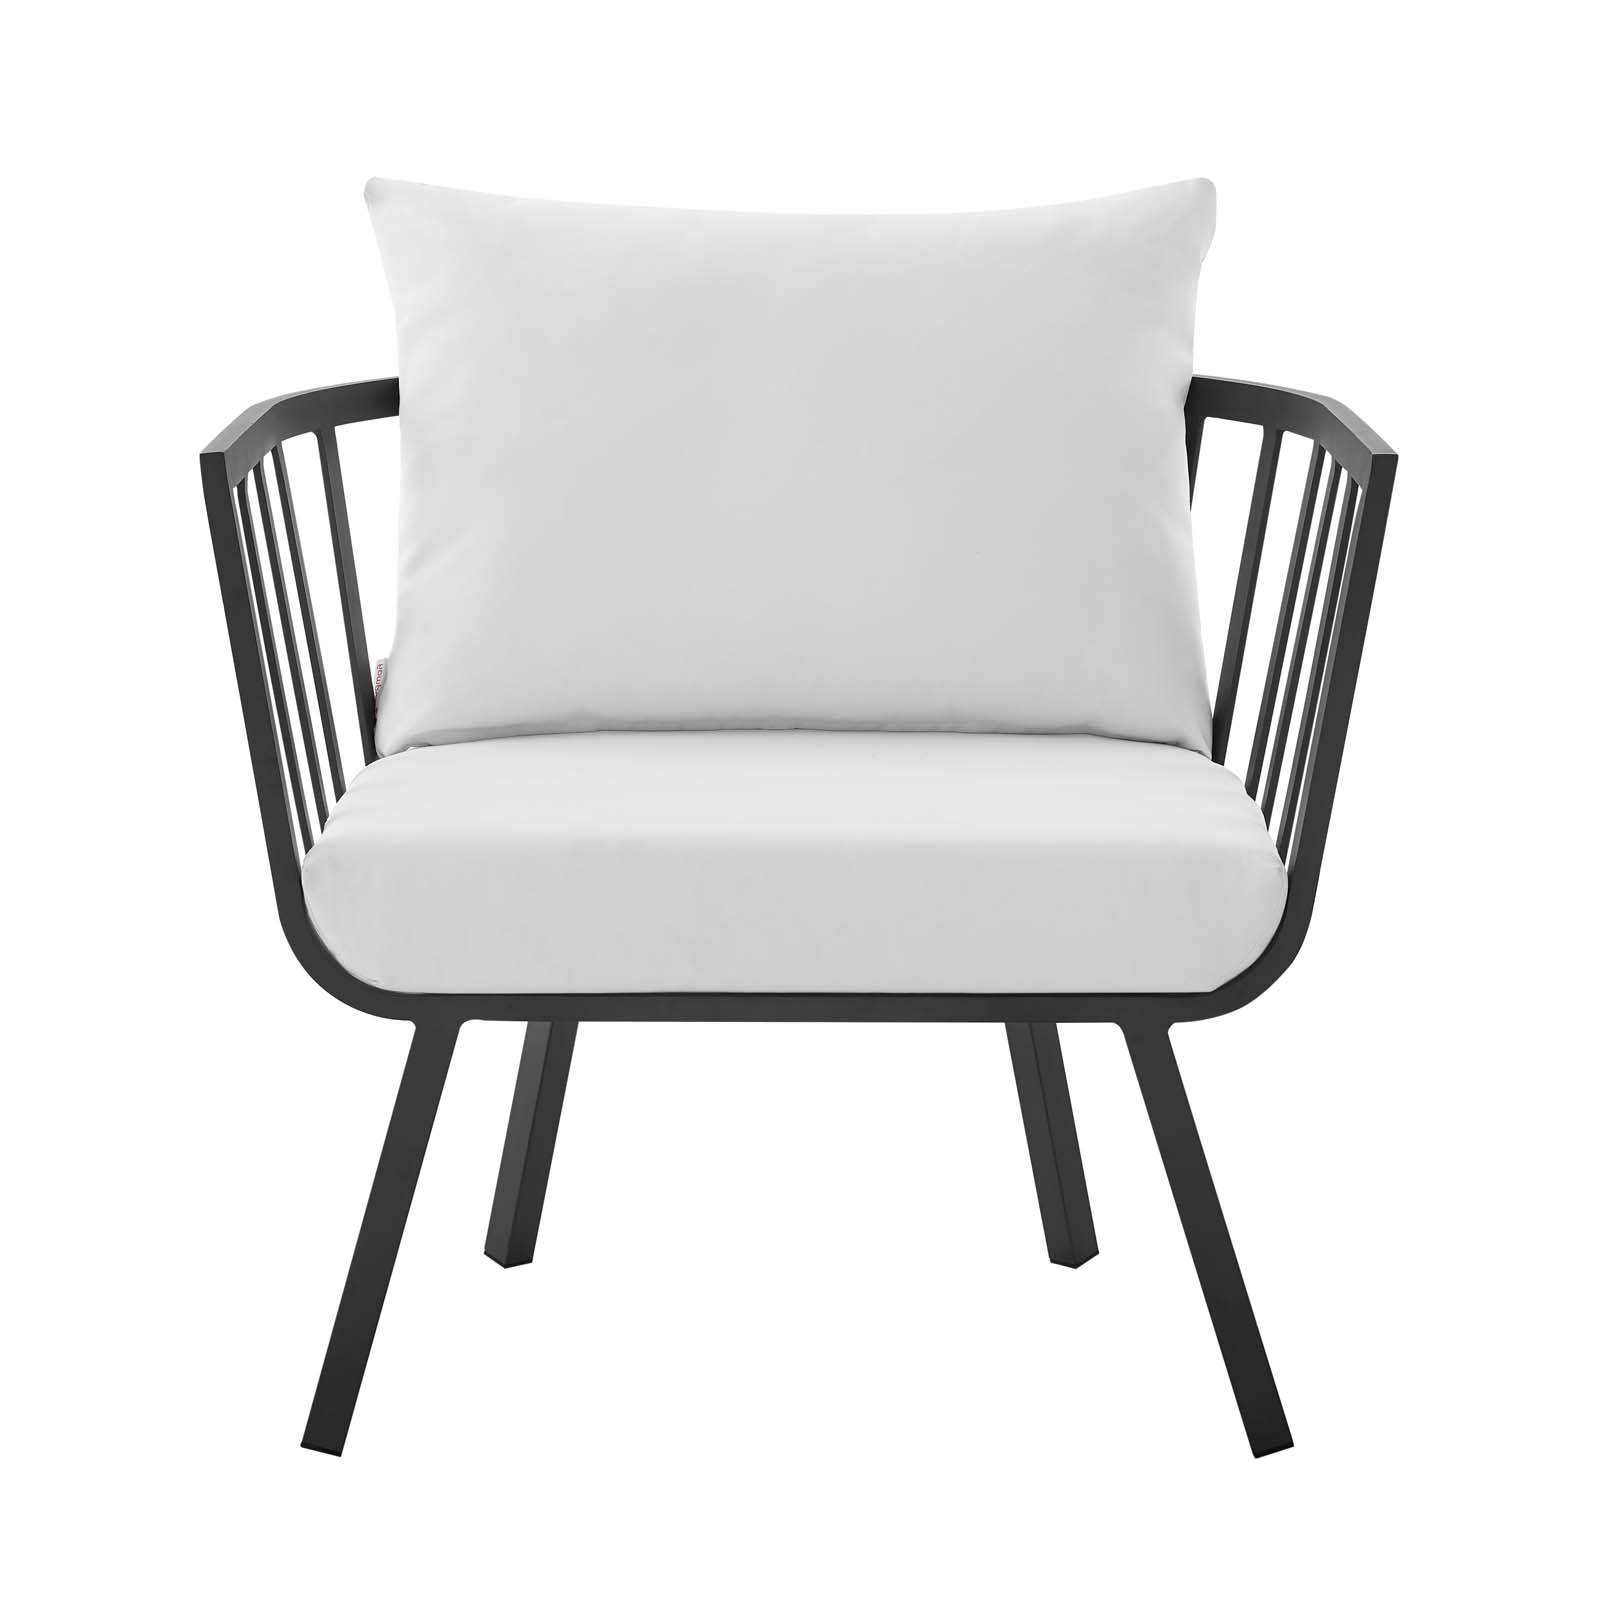 Contemporary Modern Urban Designer Outdoor Patio Balcony Garden Furniture Armchair Lounge Chair, Aluminum Fabric, Grey Gray White - image 3 of 6